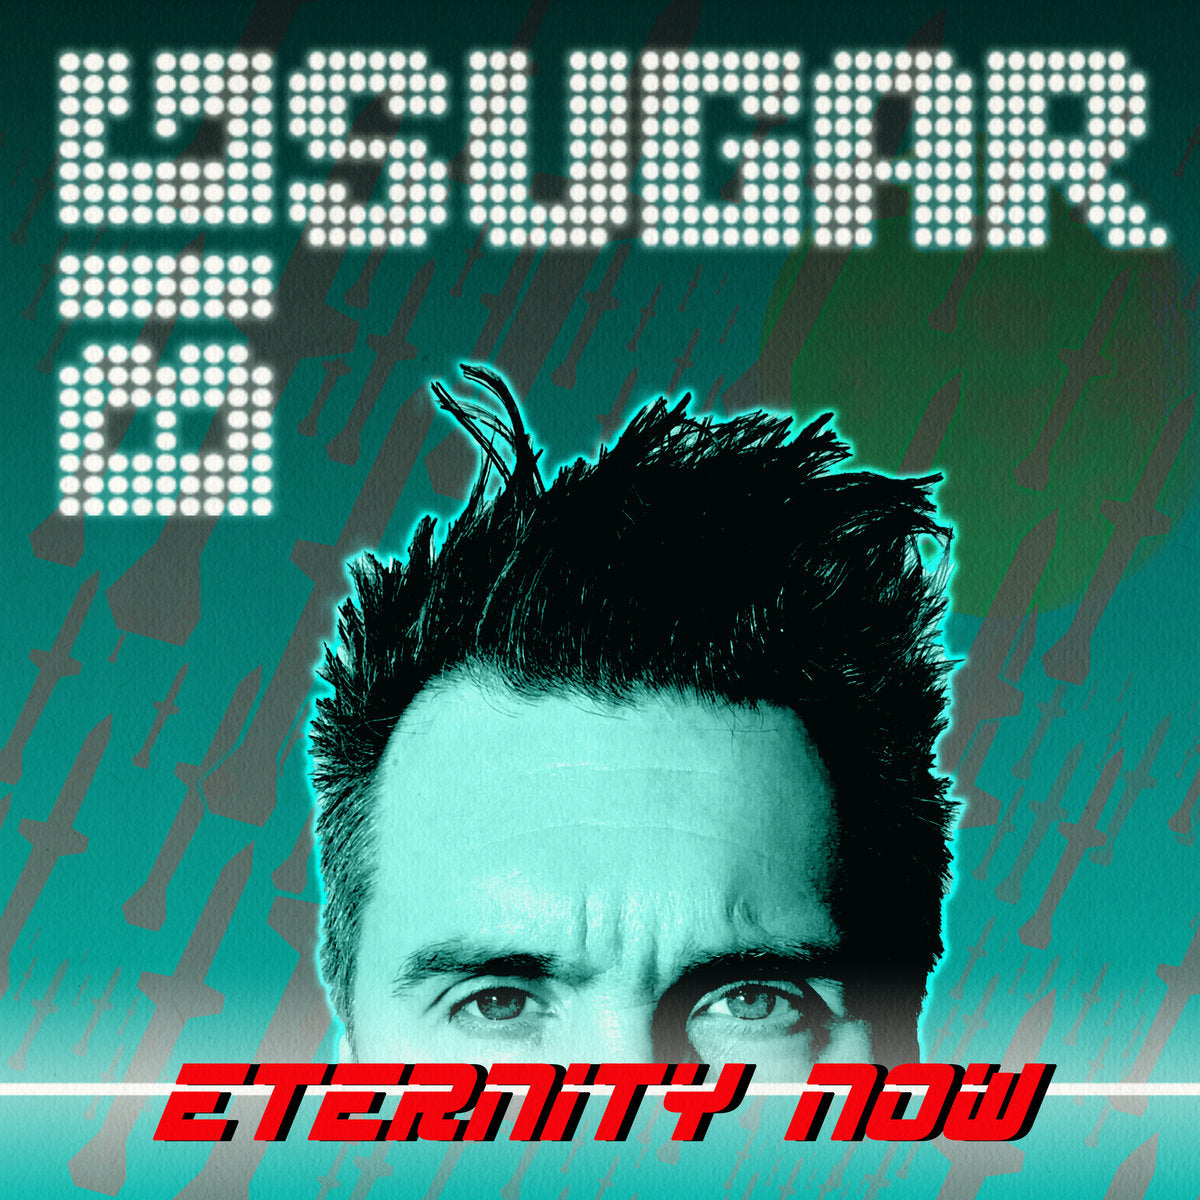 Big Sugar - Eternity Now (Vinyl LP)